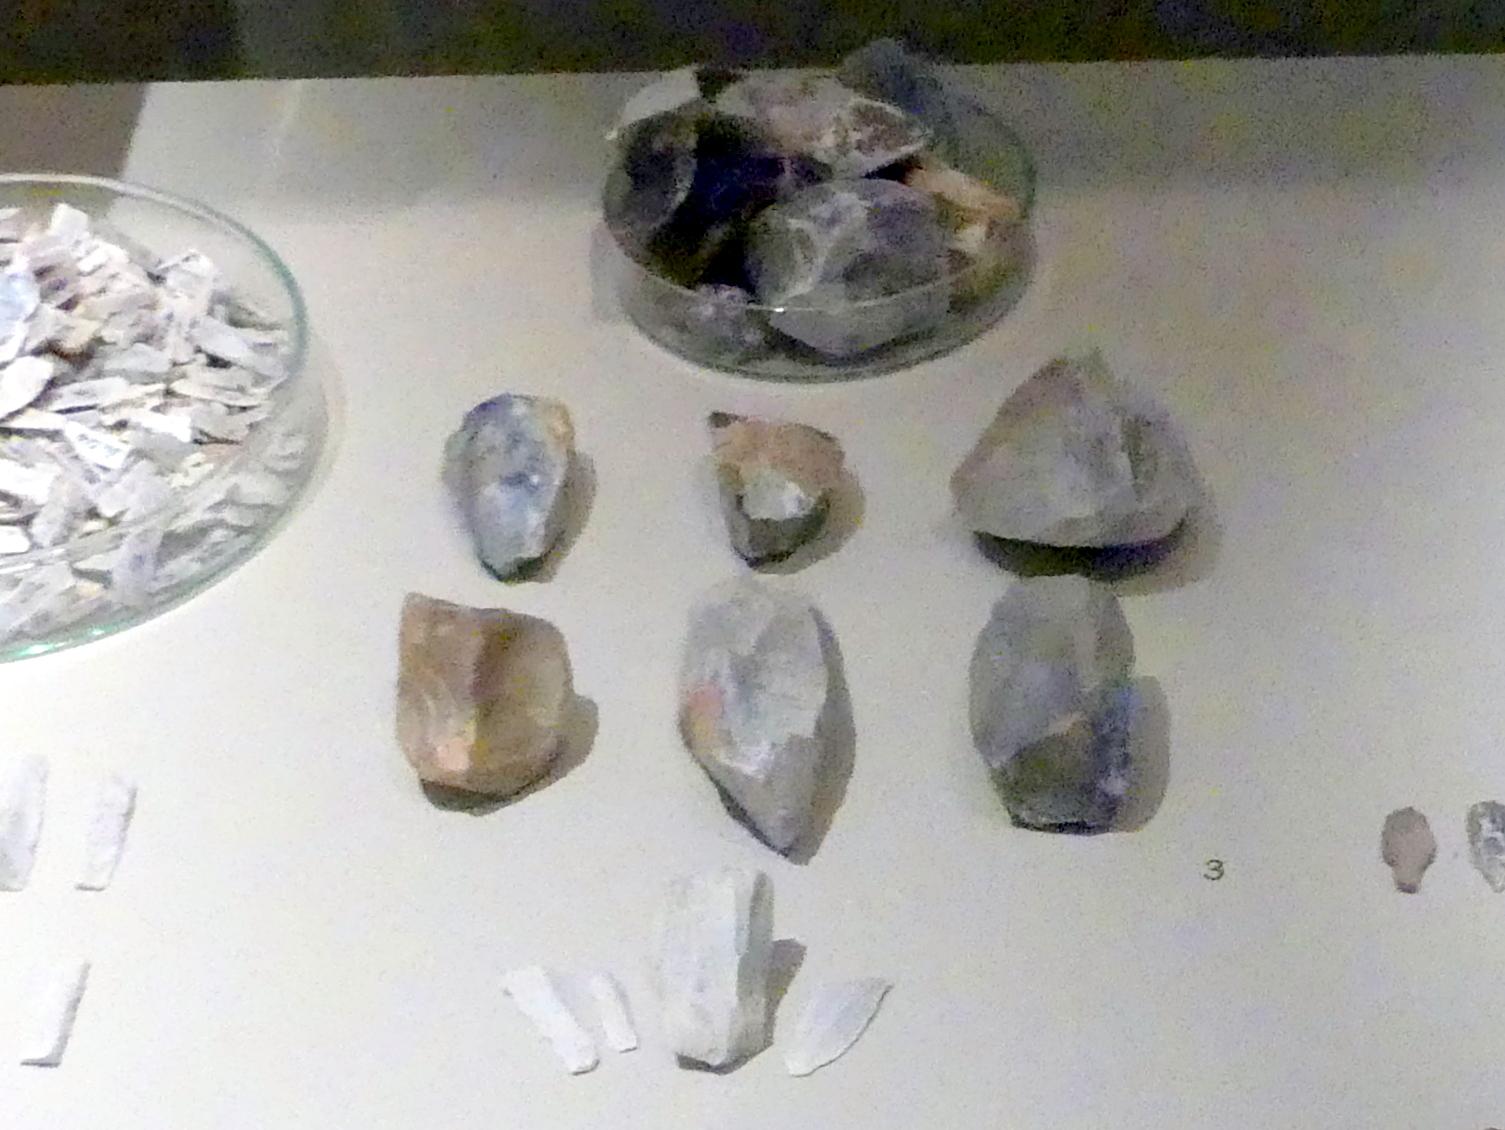 Kernsteine, Jungpaläolithikum, 43000 - 10000 v. Chr., 22000 - 12700 v. Chr., Bild 1/3